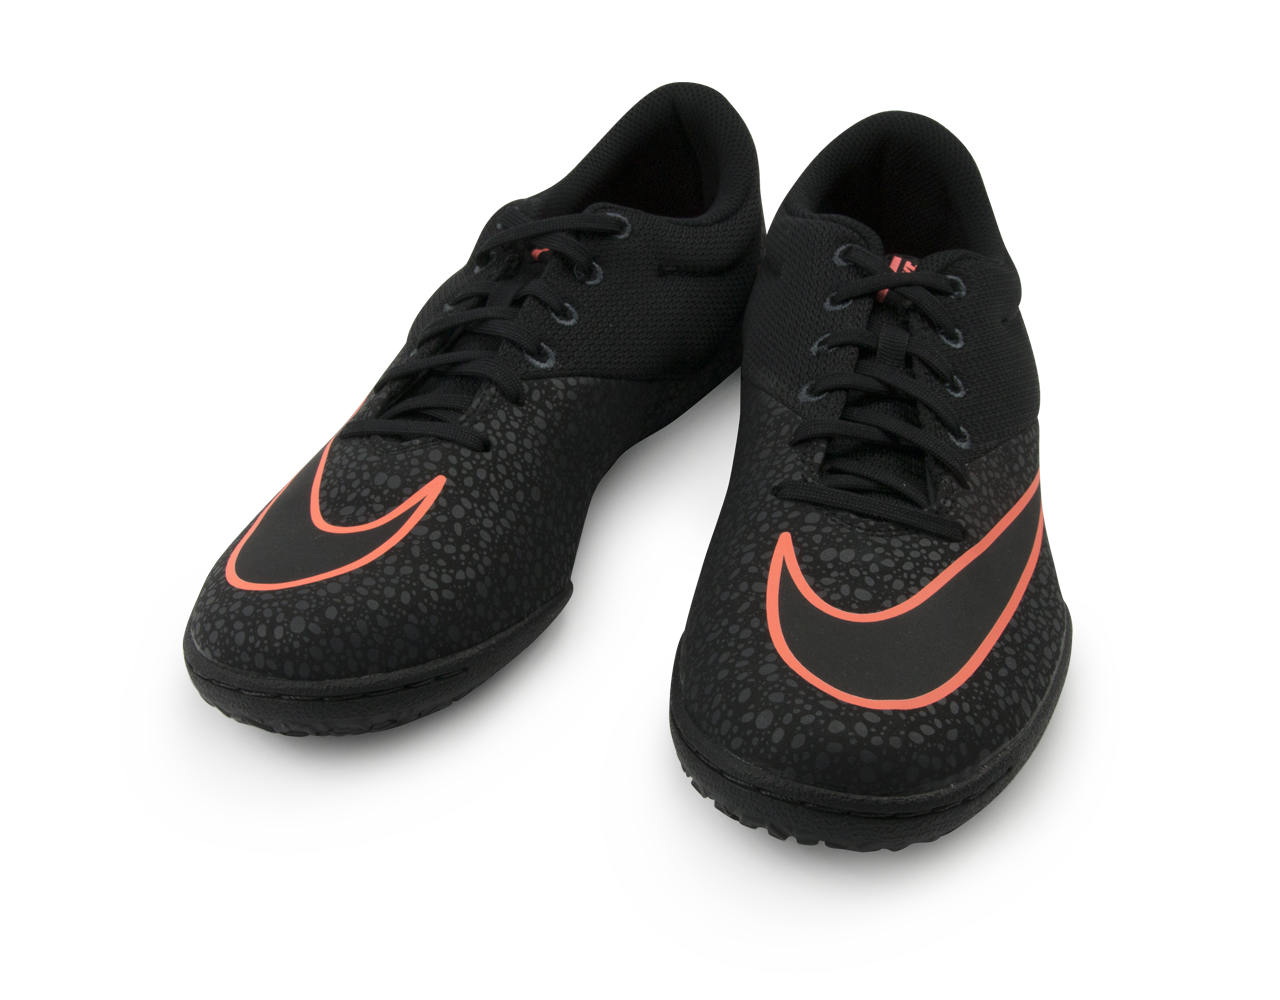 Nike Men's MercurialX Pro Indoor Soccer Shoes Black/Black/Anthracite –